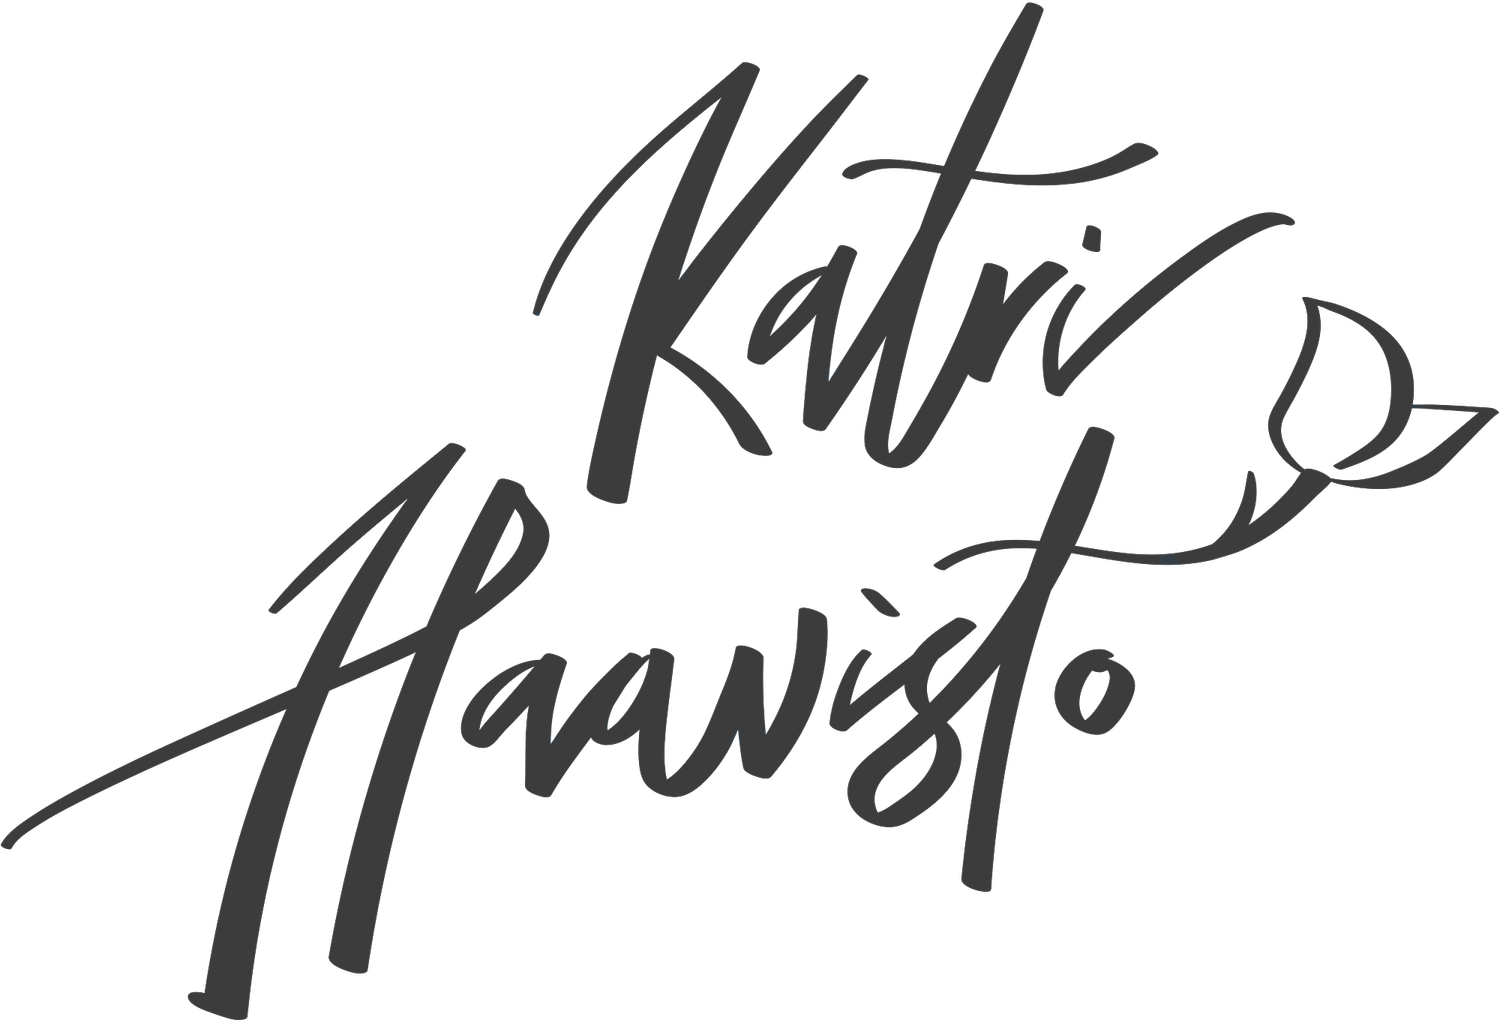 Katri Haavisto // Save the Flame